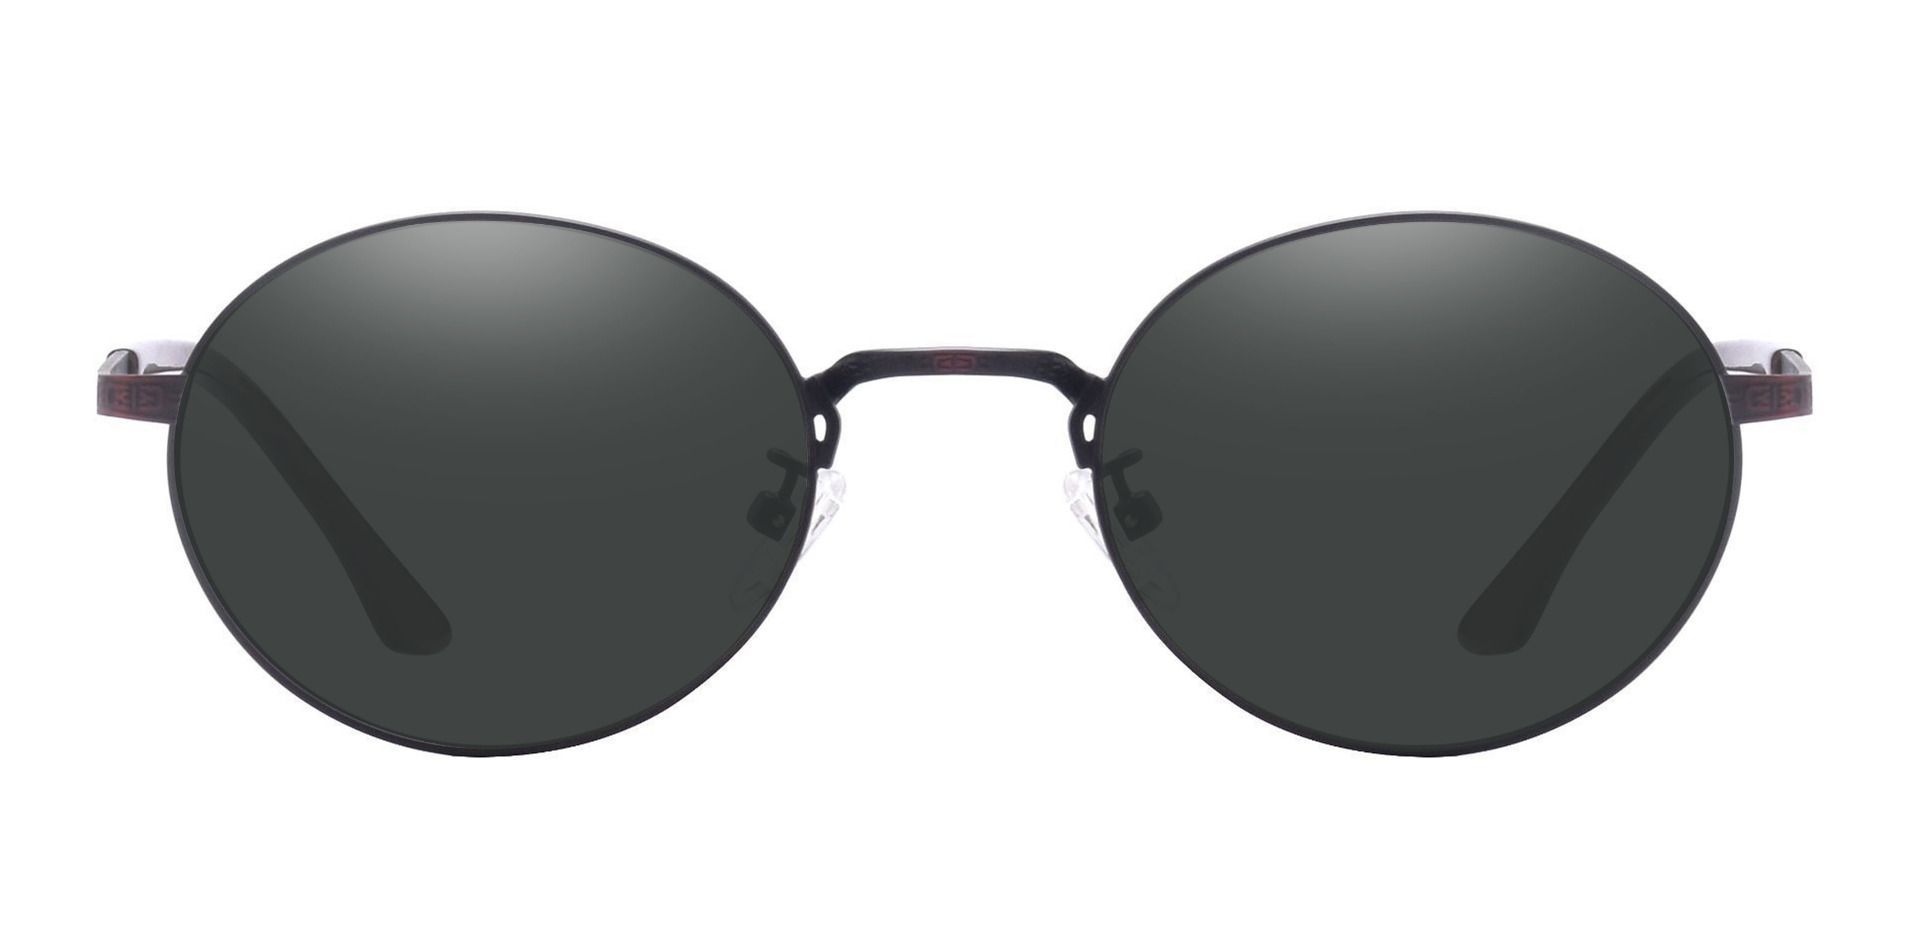 Tristan Round Prescription Sunglasses - Red Frame With Gray Lenses